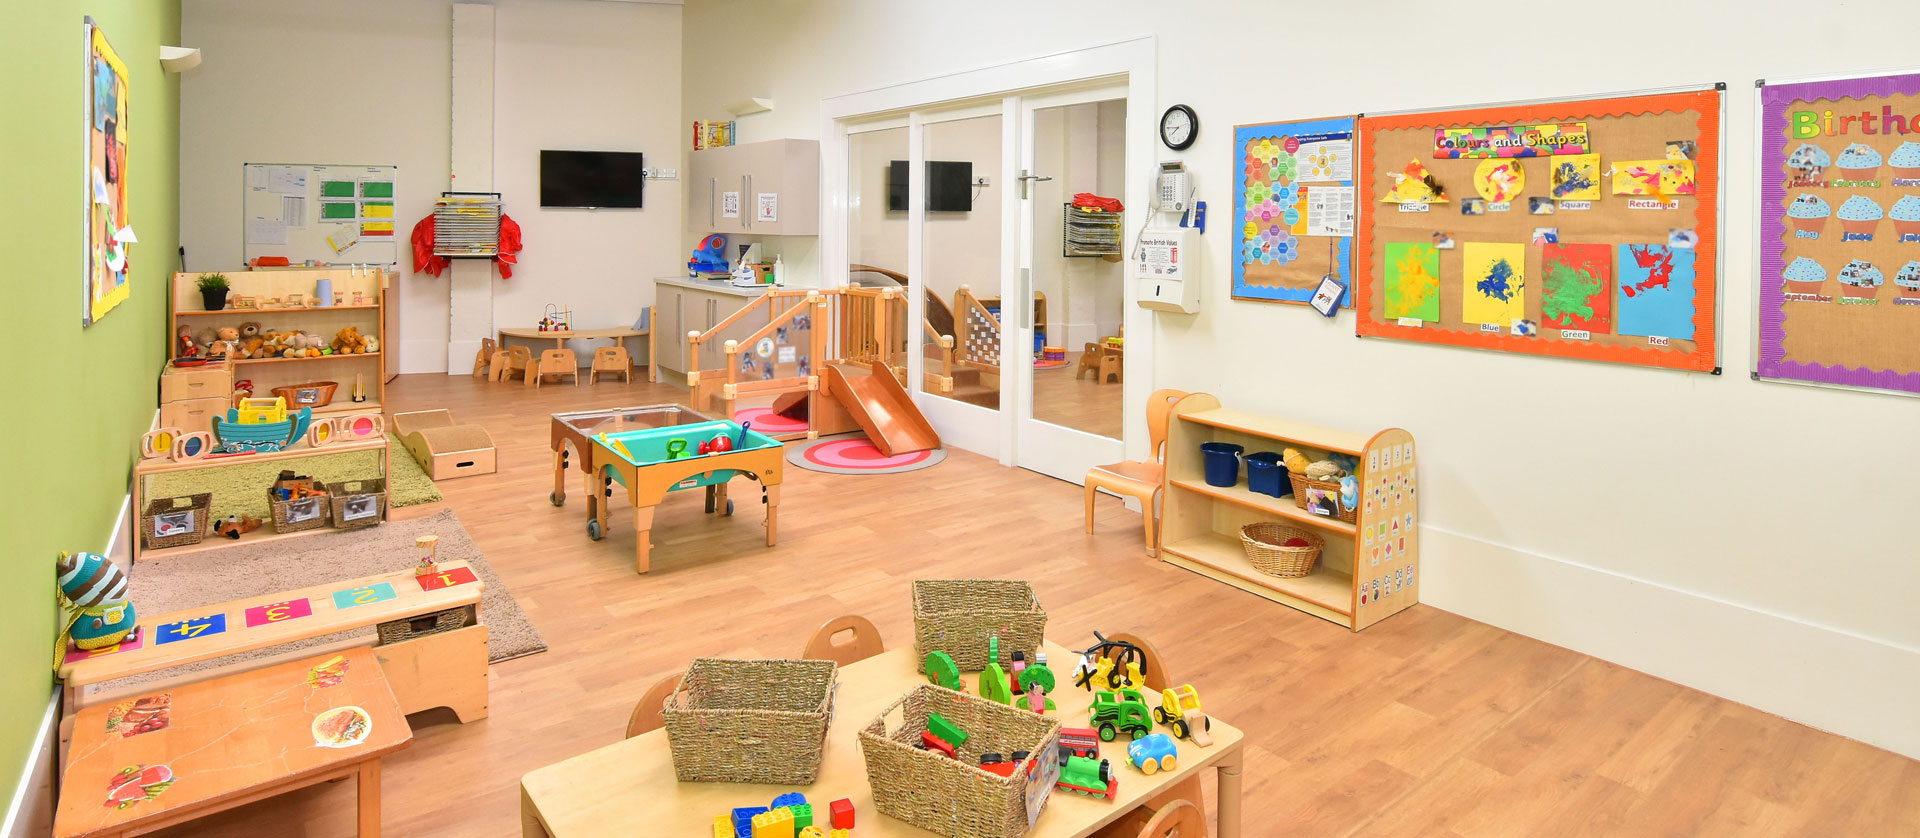 Fulham Day Nursery and Preschool